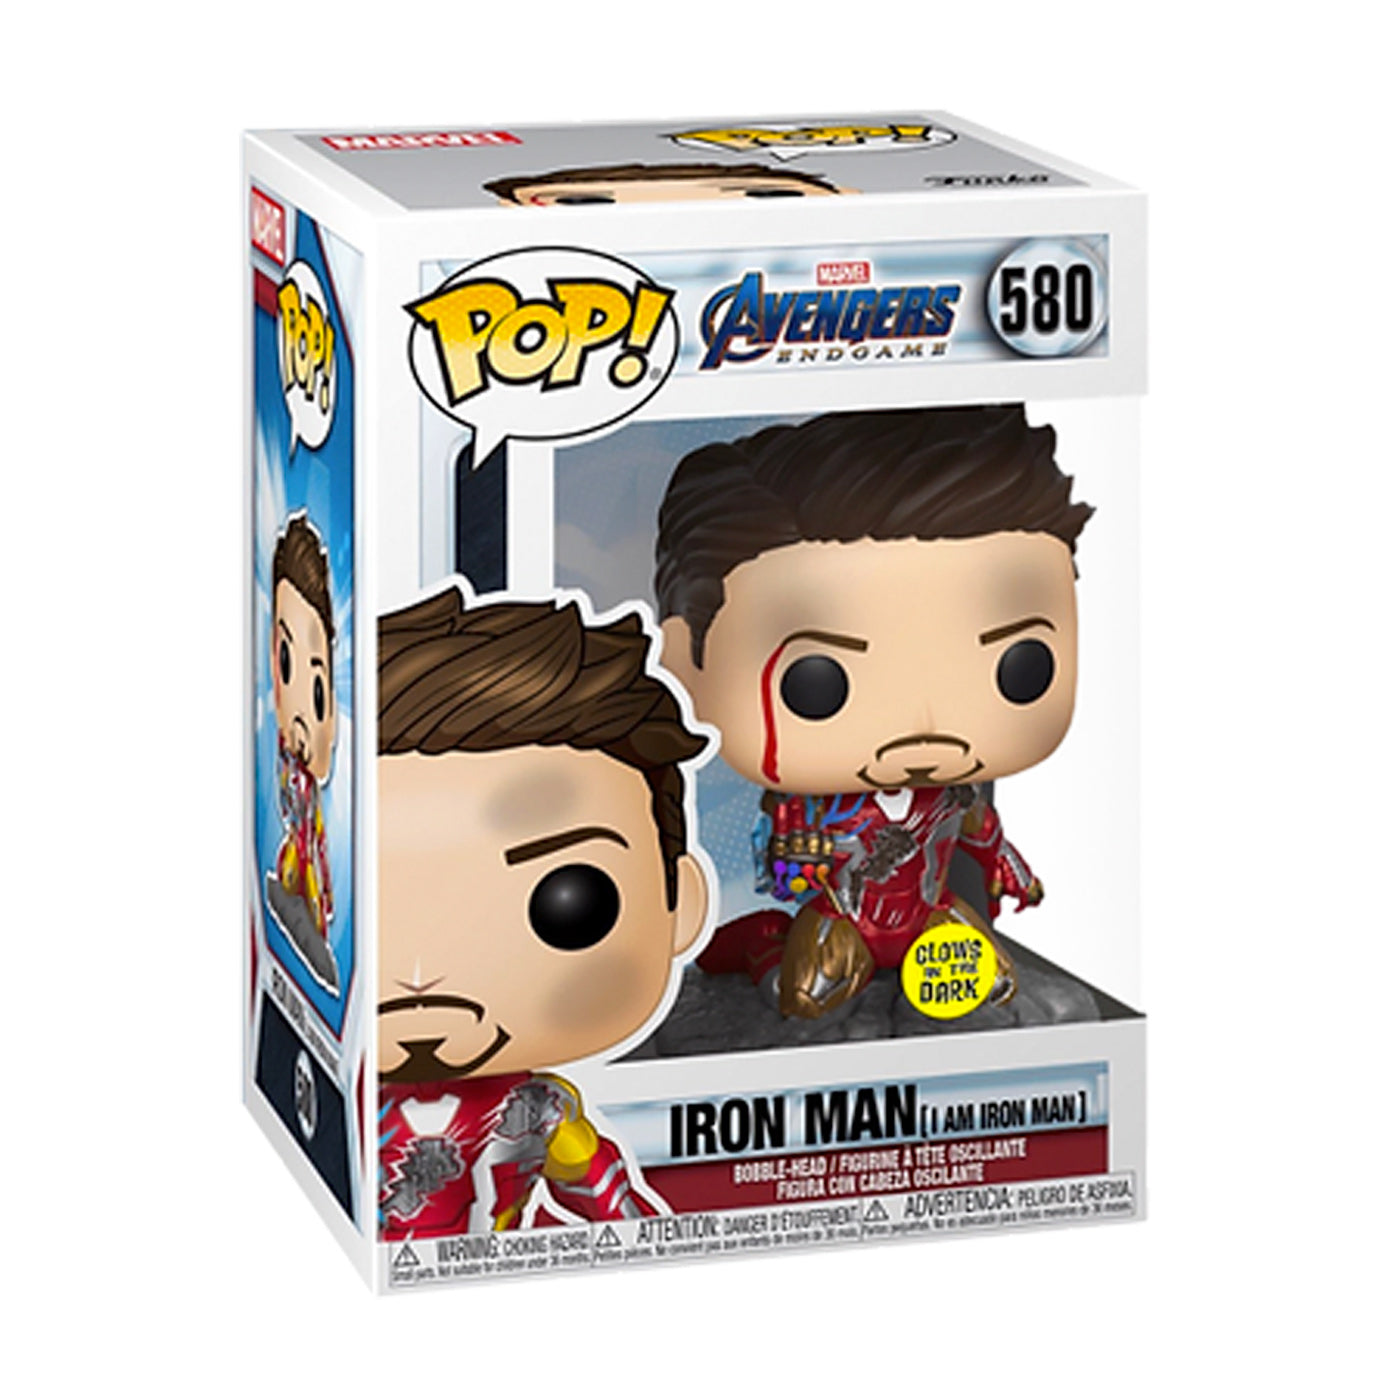 Funko Pop: Iron Man Glow in the Dark (580)